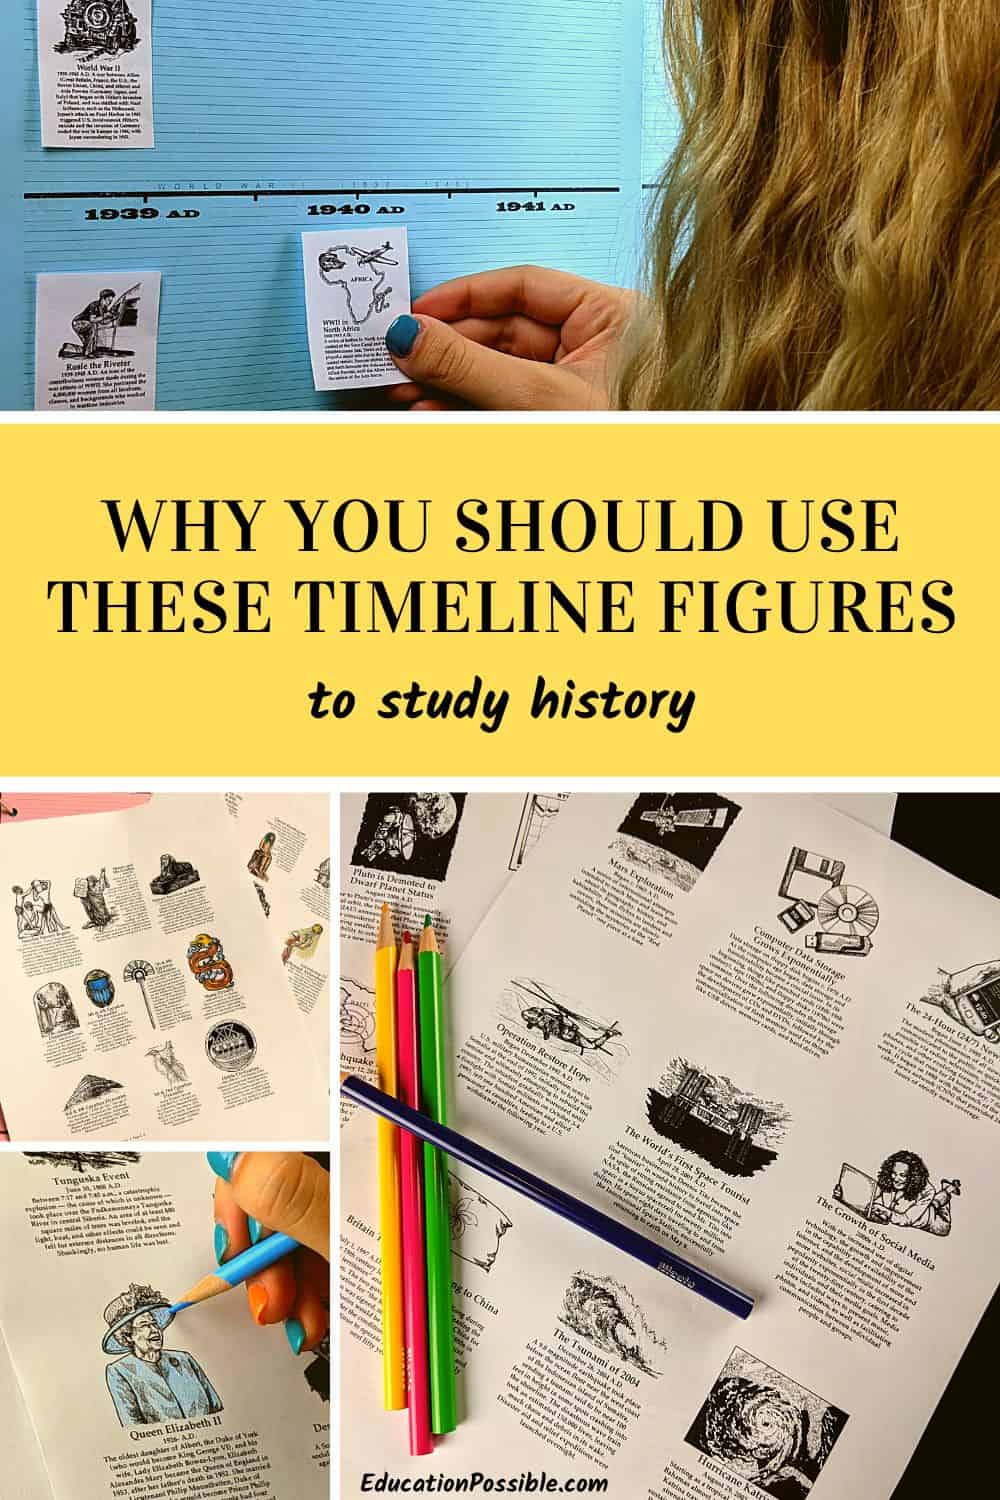 Timeline Figures Help Make History Interactive for Tweens